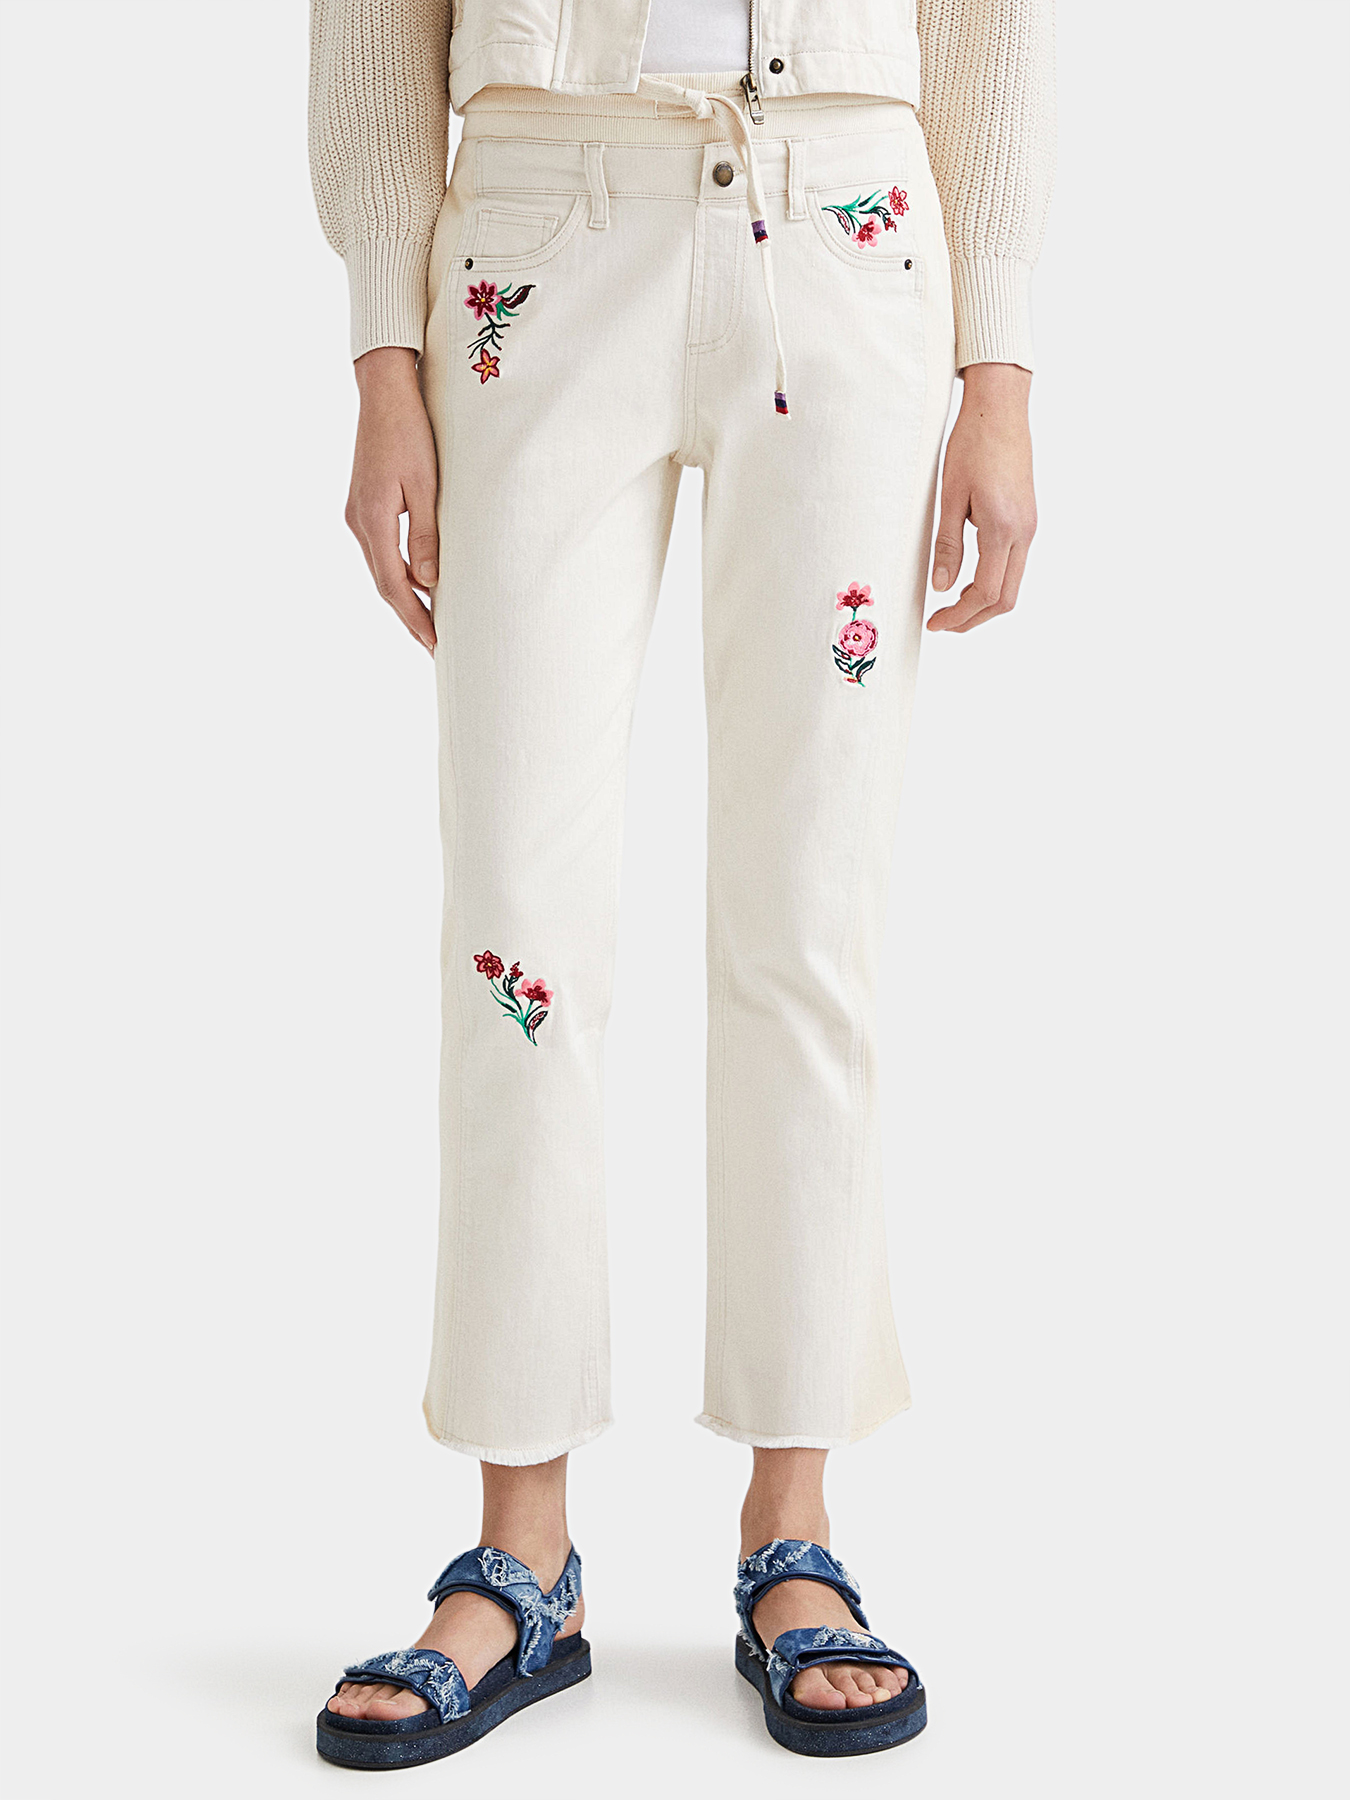 LITA jeans with floral embroidery brand DESIGUAL — Globalbrandsstore.com/en